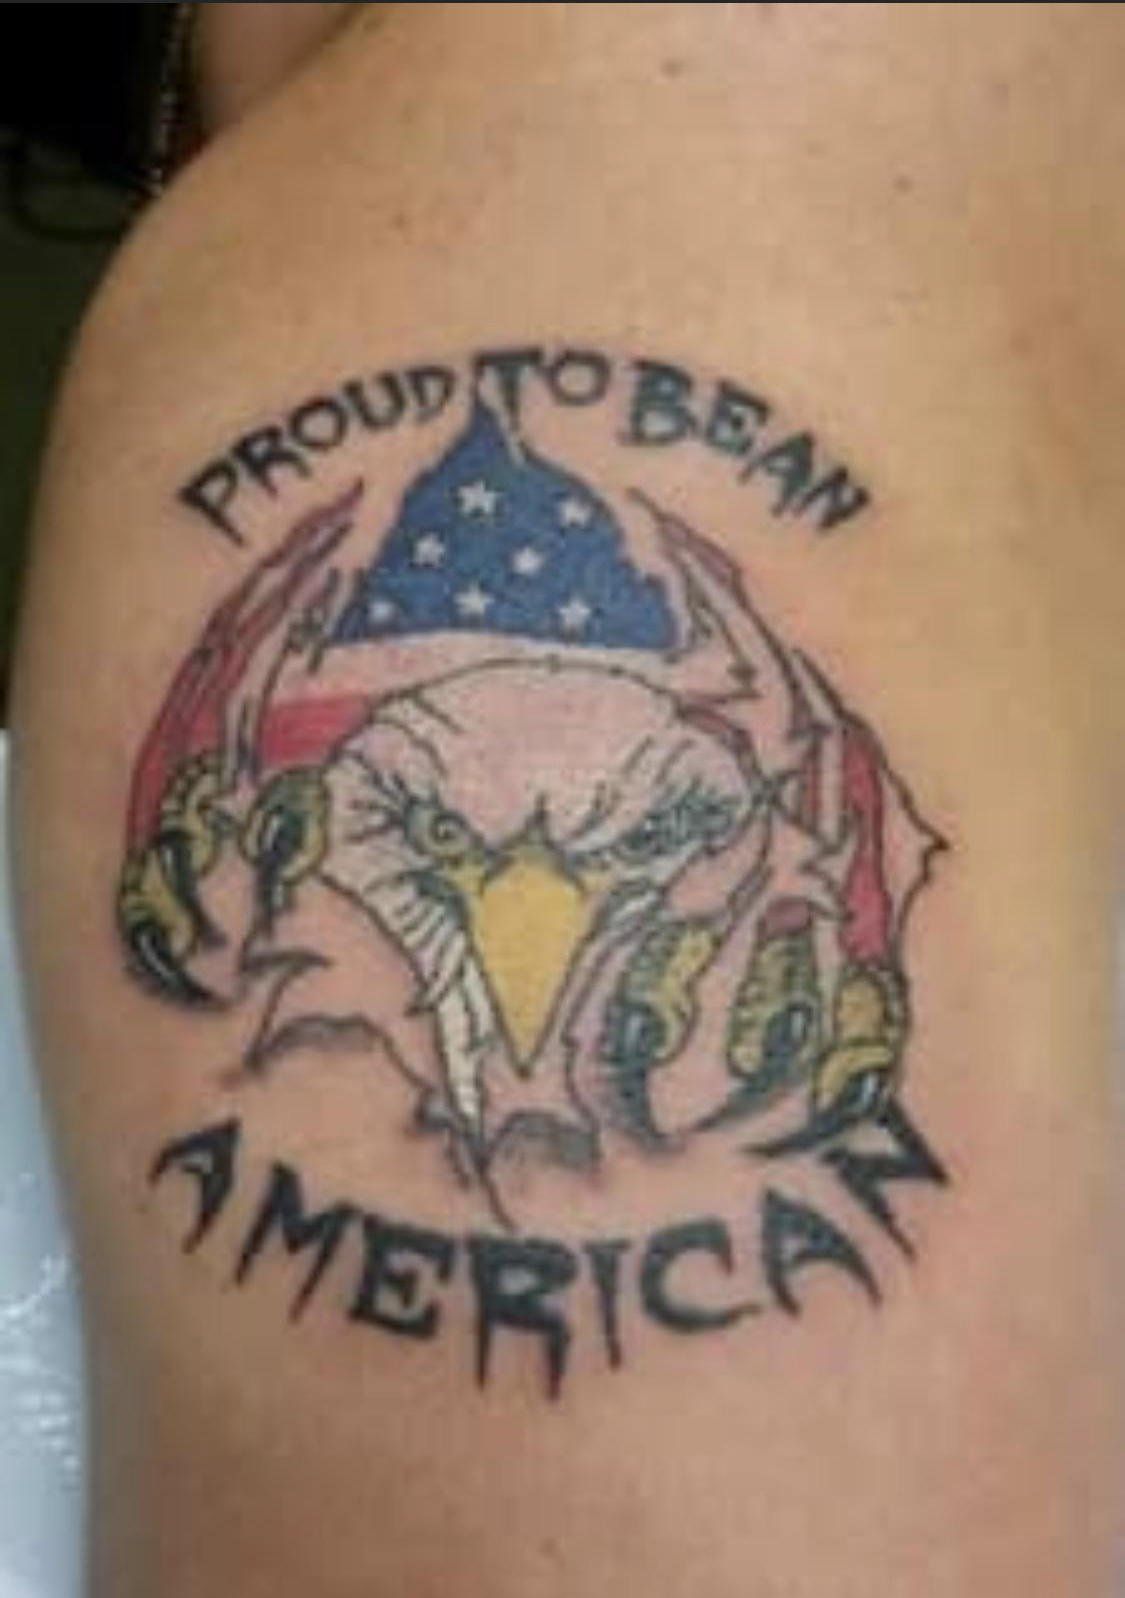 Proud to bean american